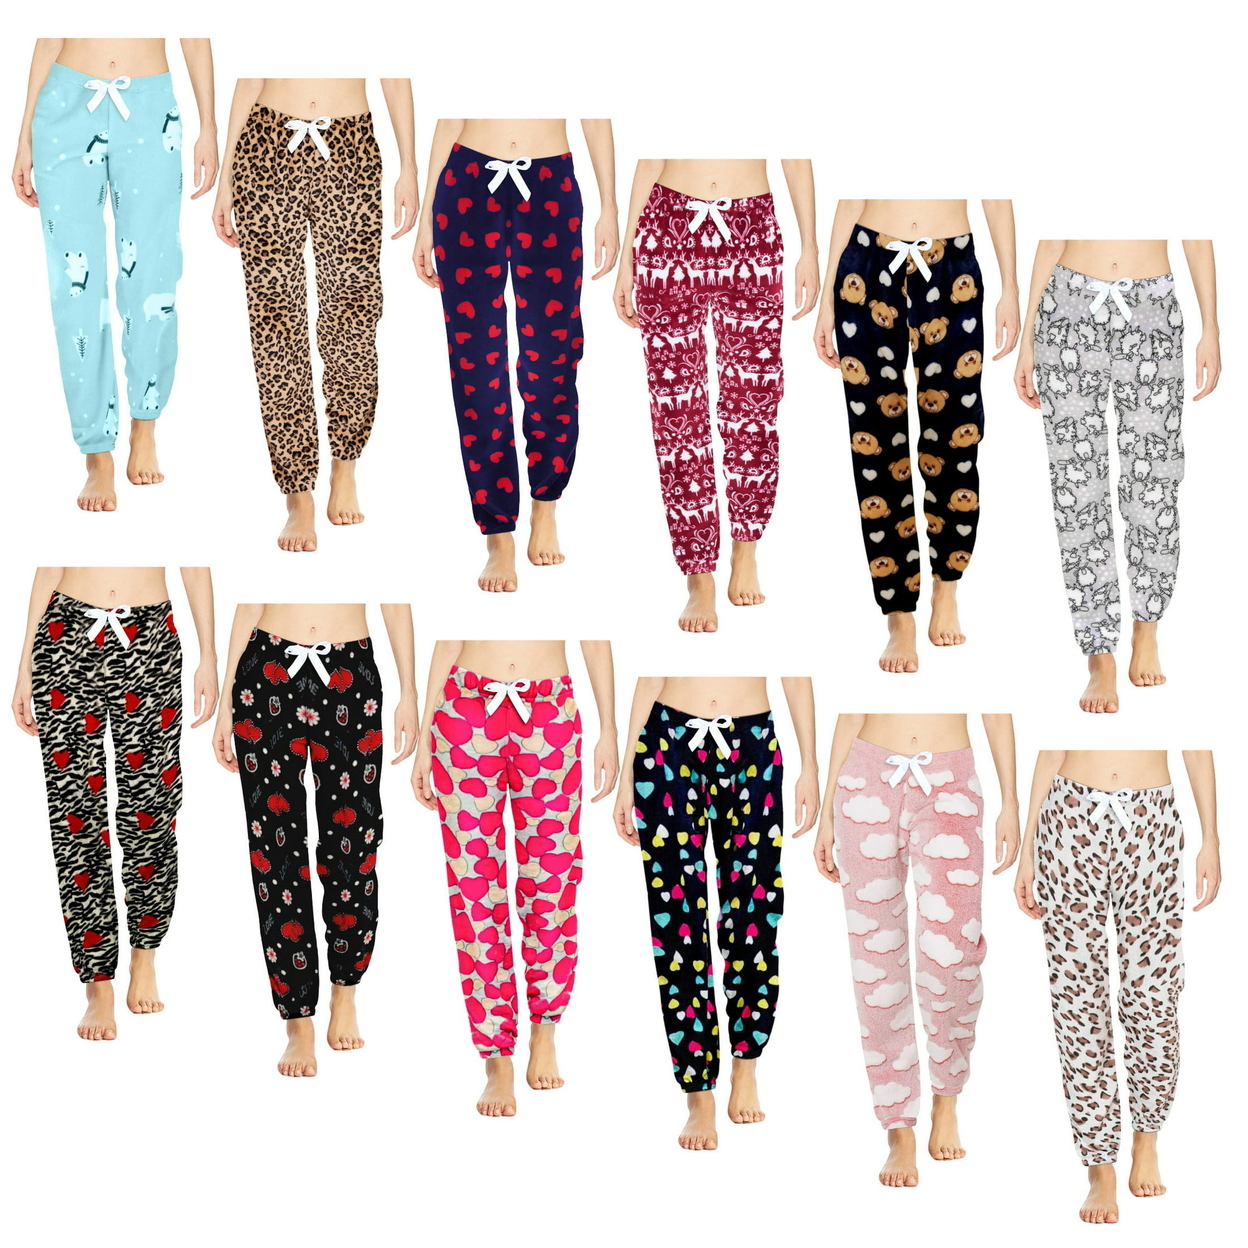 4-Pack: Women's Printed Ultra-Soft Comfy Stretch Micro-Fleece Pajama Lounge Pants - Medium, Love